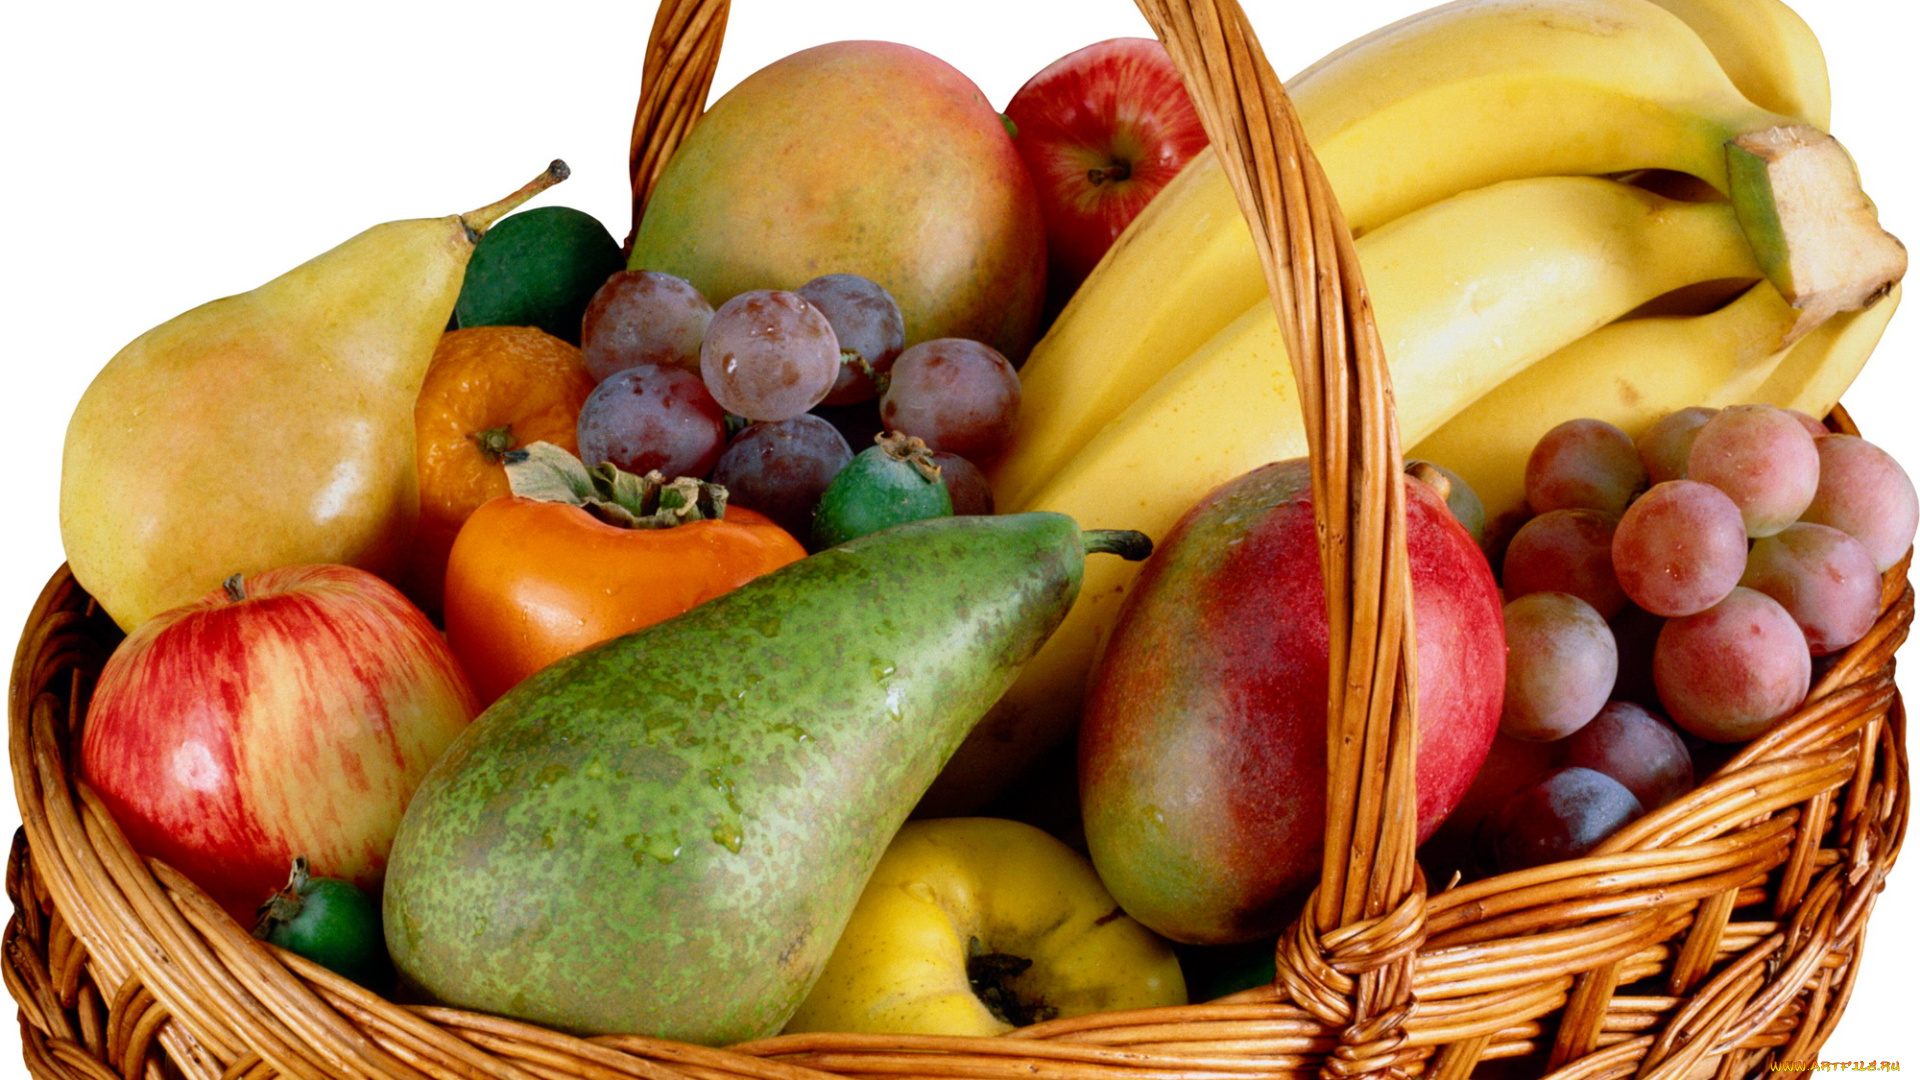 еда, фрукты, ягоды, хурма, манго, груши, бананы, корзина, виноград